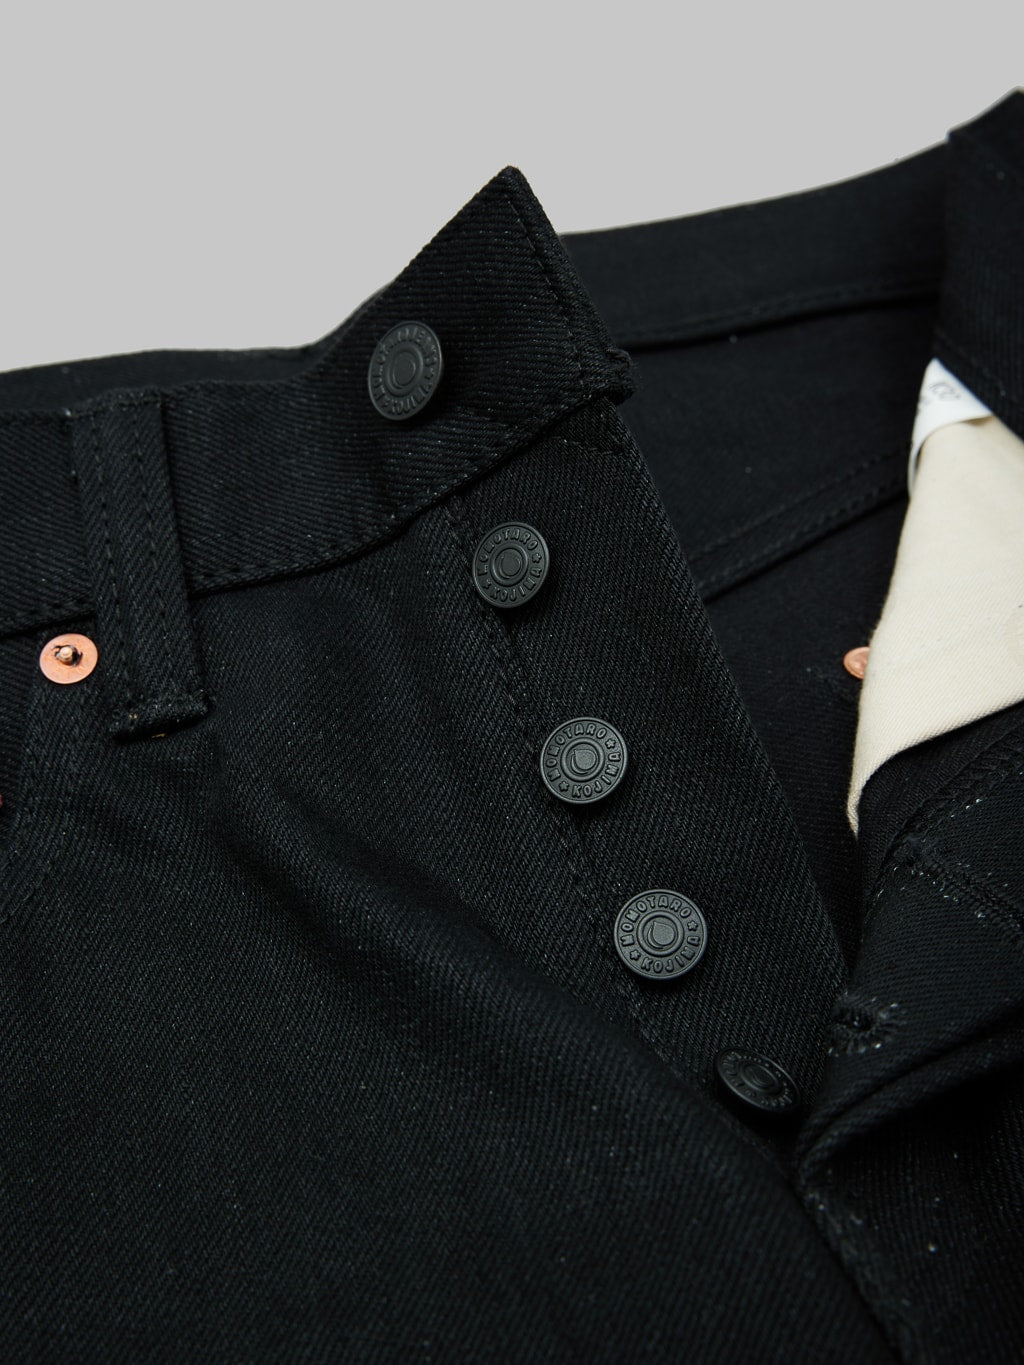 momotaro 0405b selvedge black denim high tapered jeans buttons